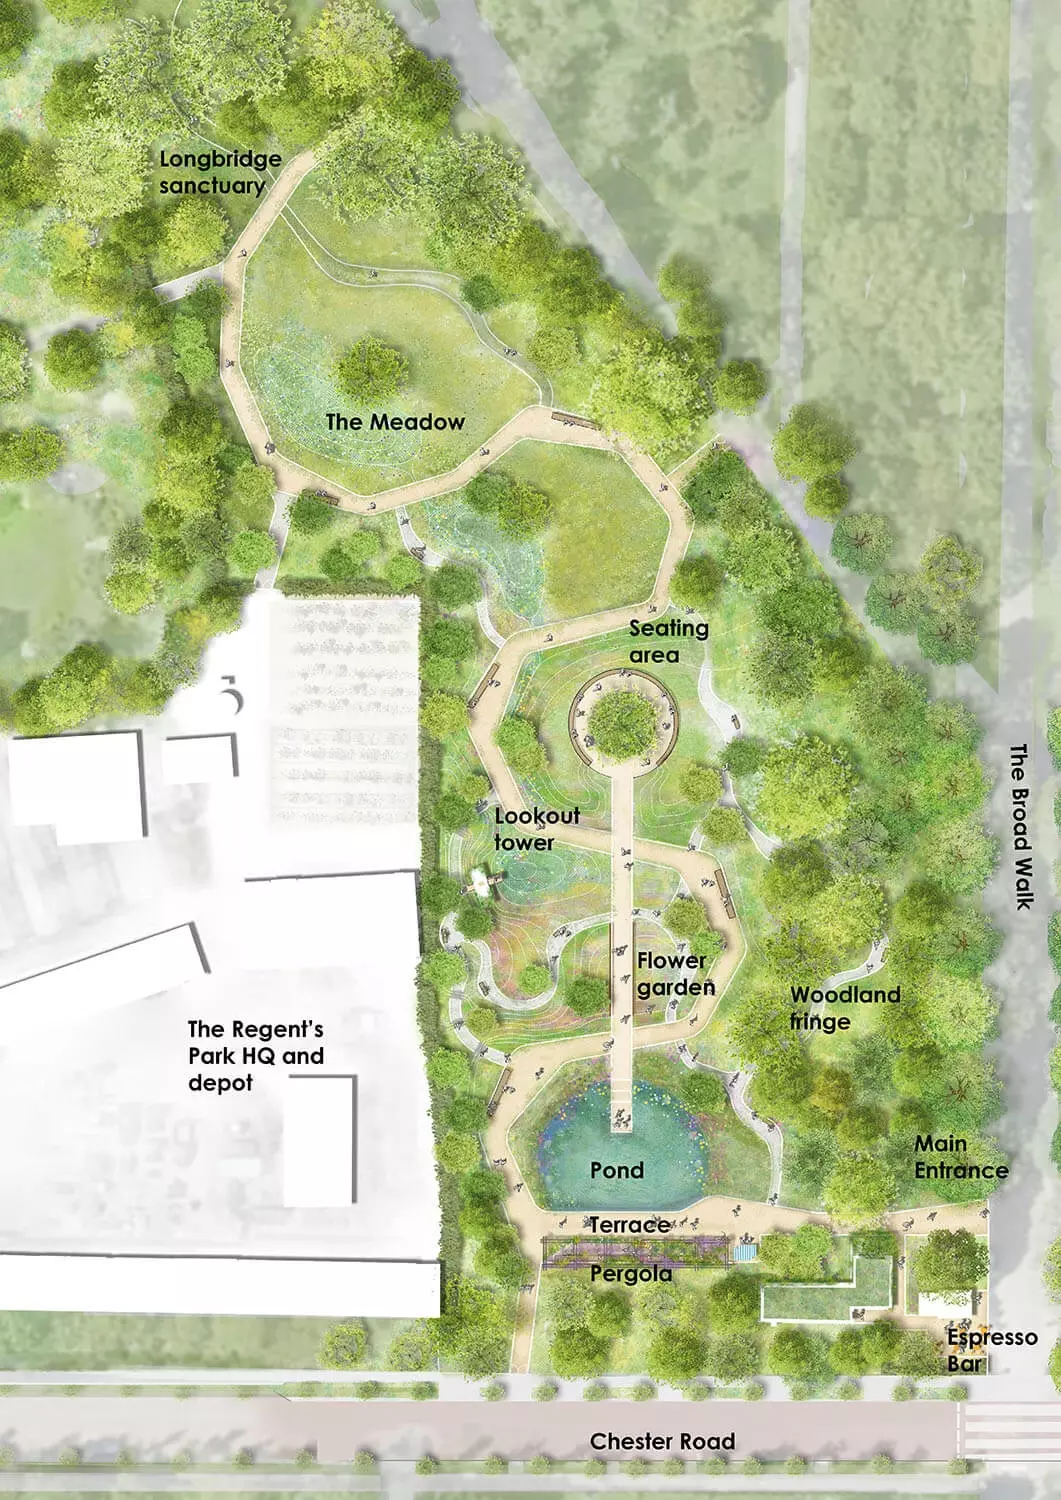 Sketch plan proposals for the garden